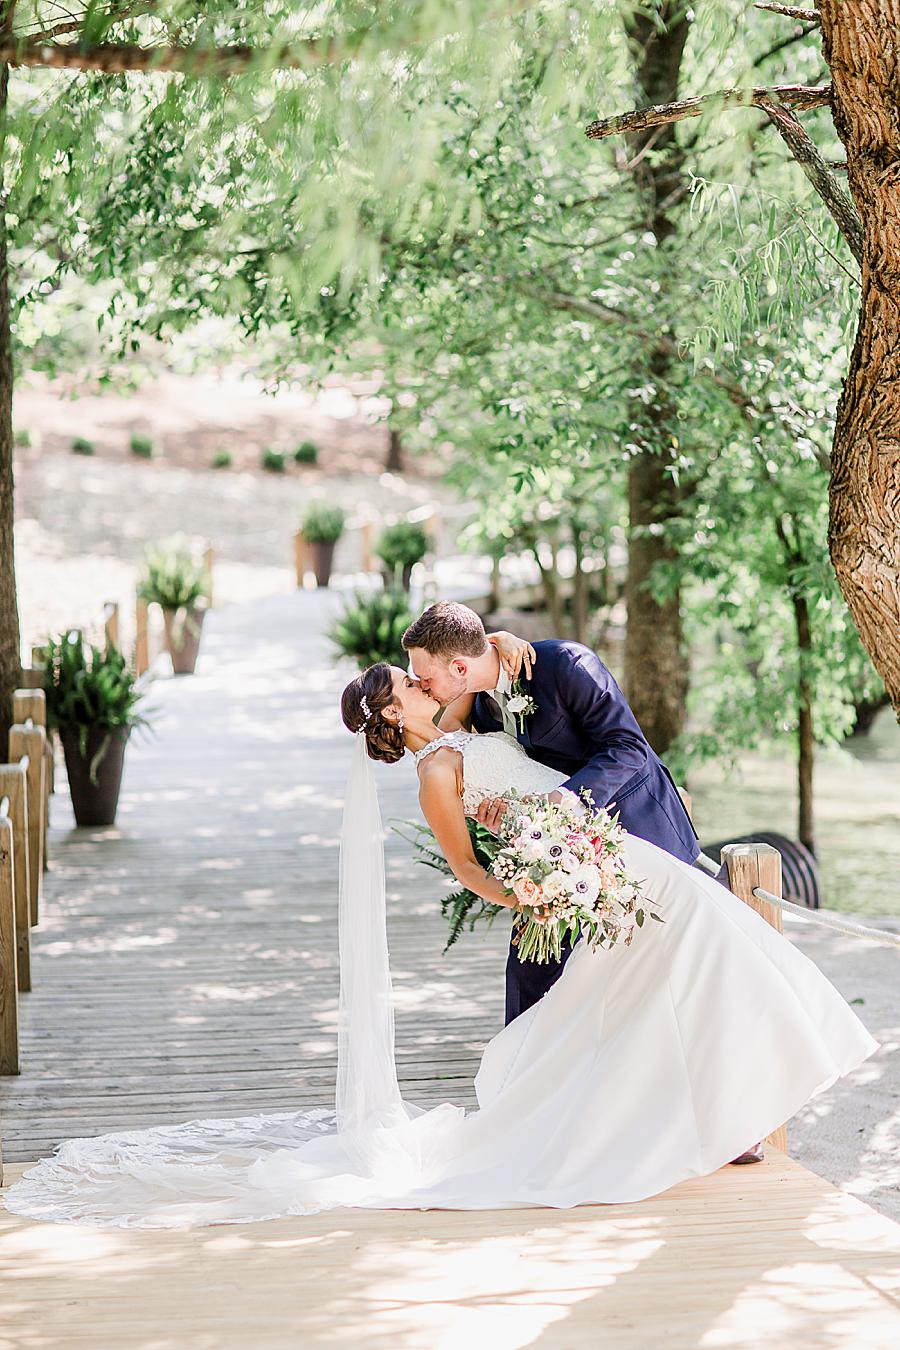 Dip kiss at this pavilion wedding by Knoxville Wedding Photographer, Amanda May Photos.